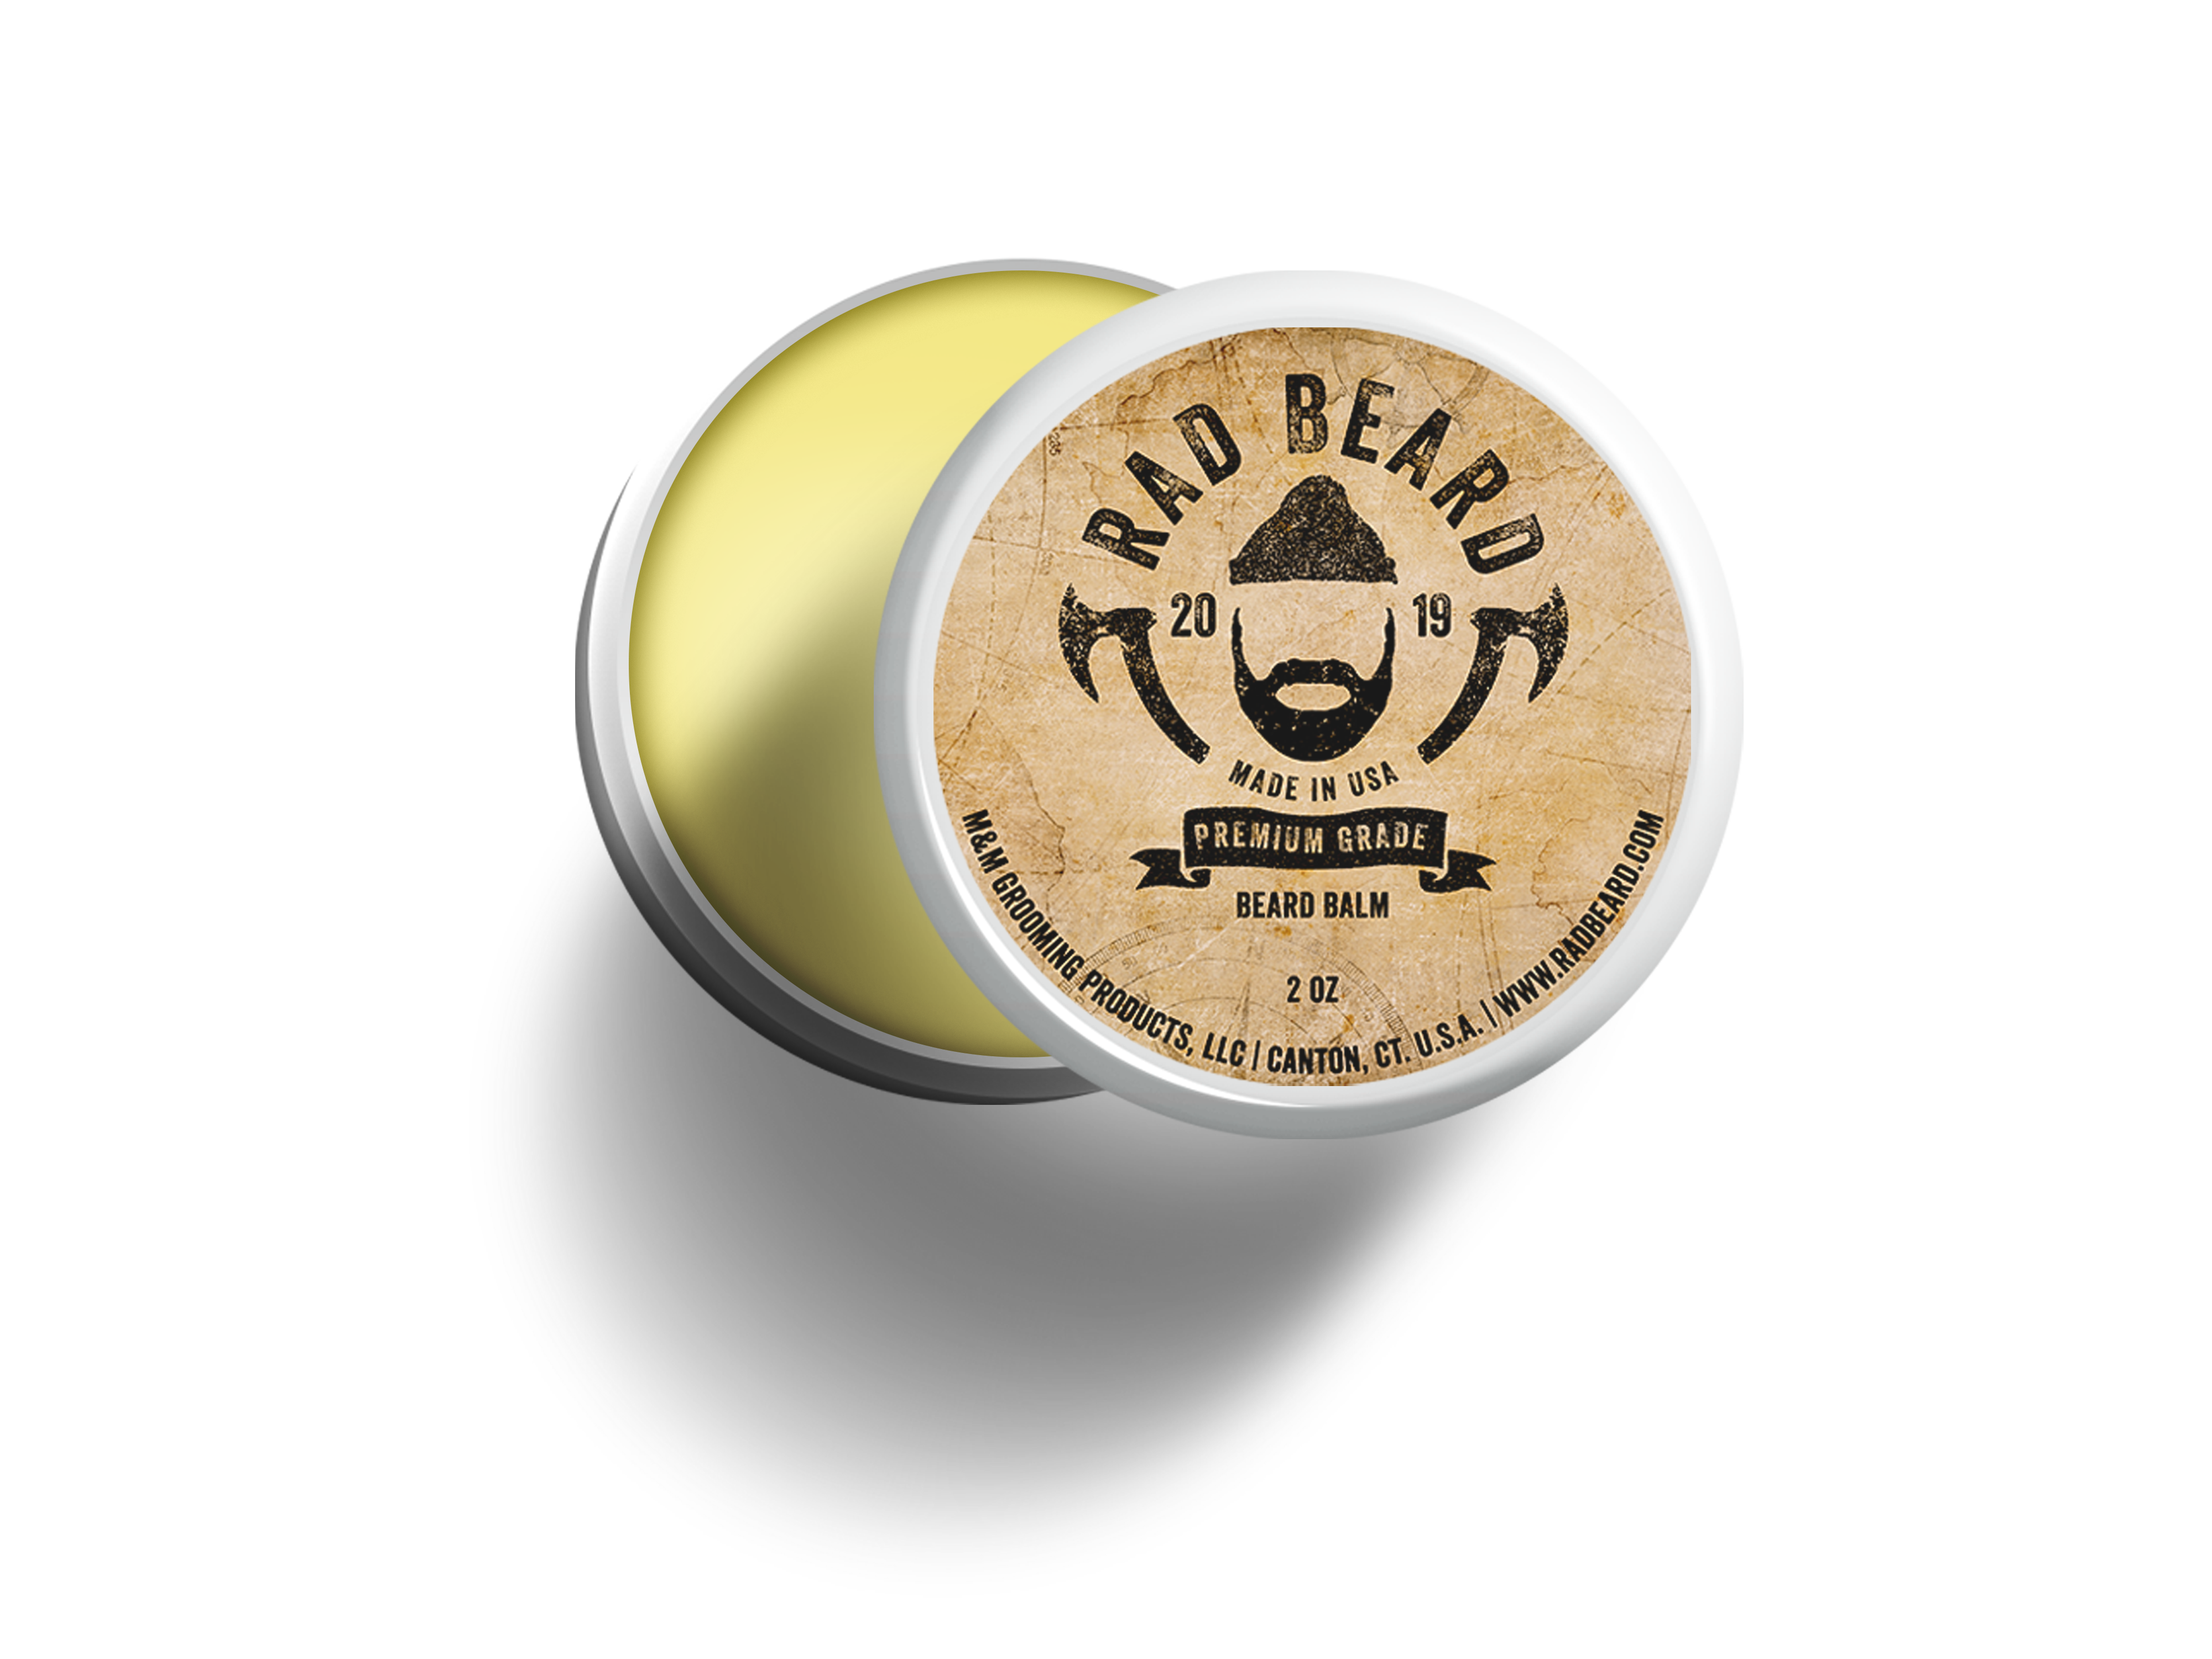 Premium Beard Balm 2oz - Rad Beard Club